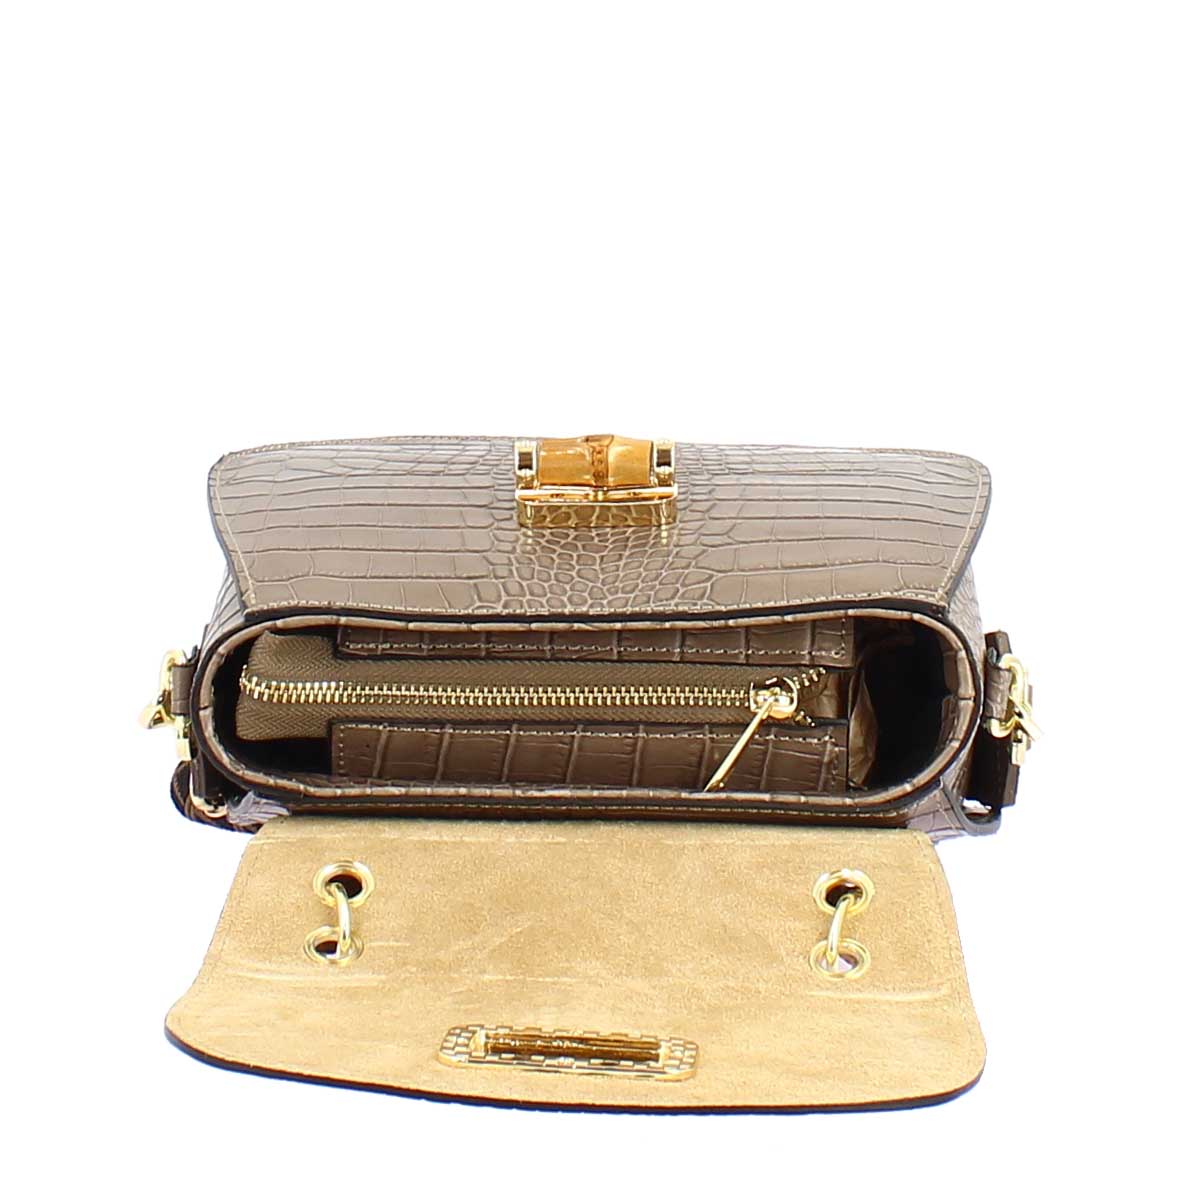 Handmade women's handbag in beige leather with removable shoulder strap